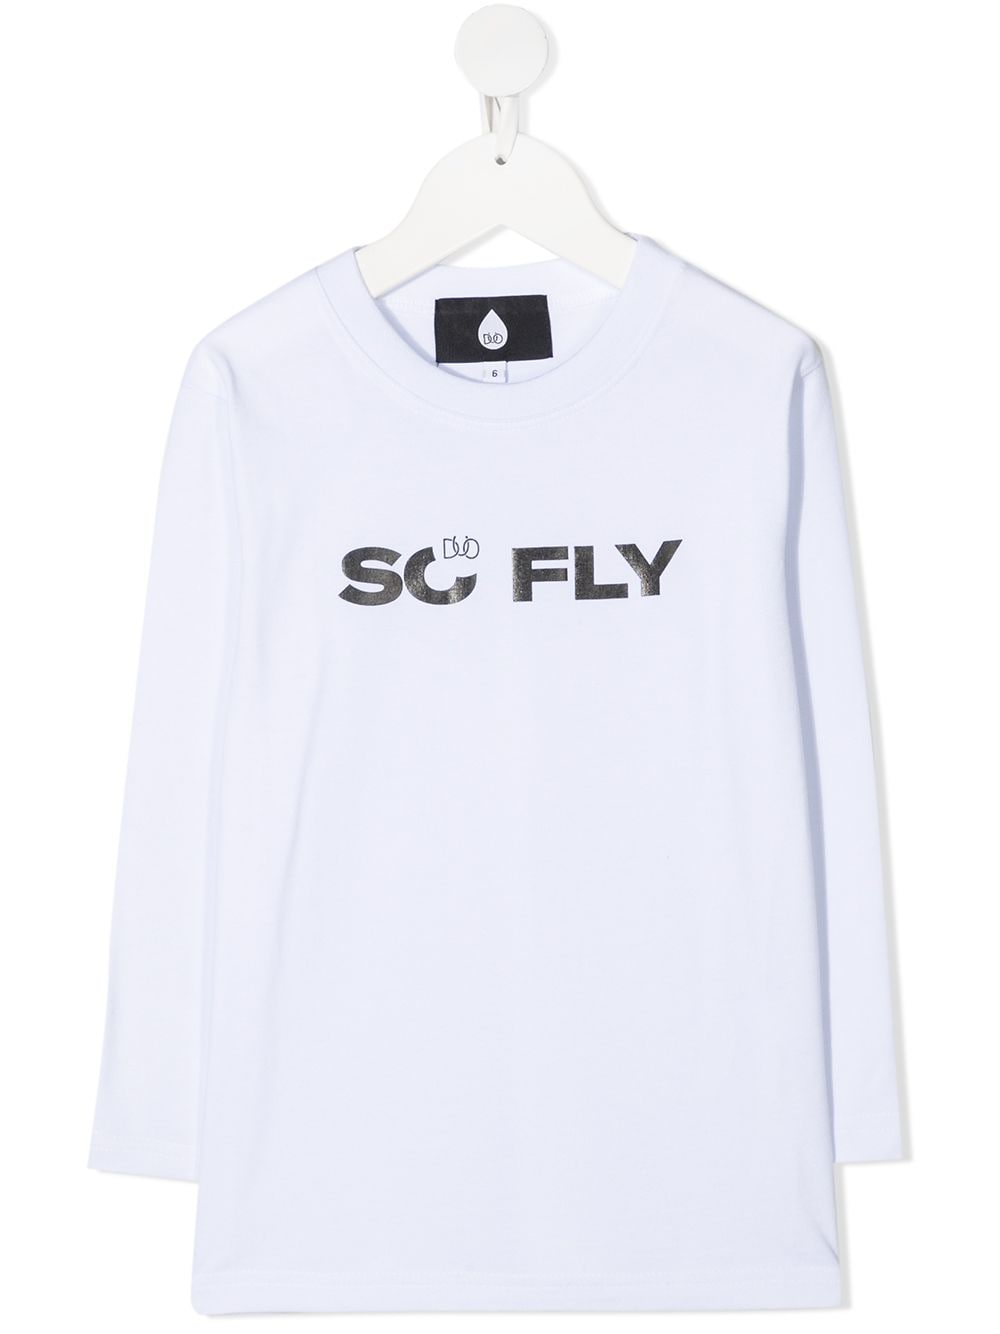 DUOltd So Fly T-shirt - White von DUOltd